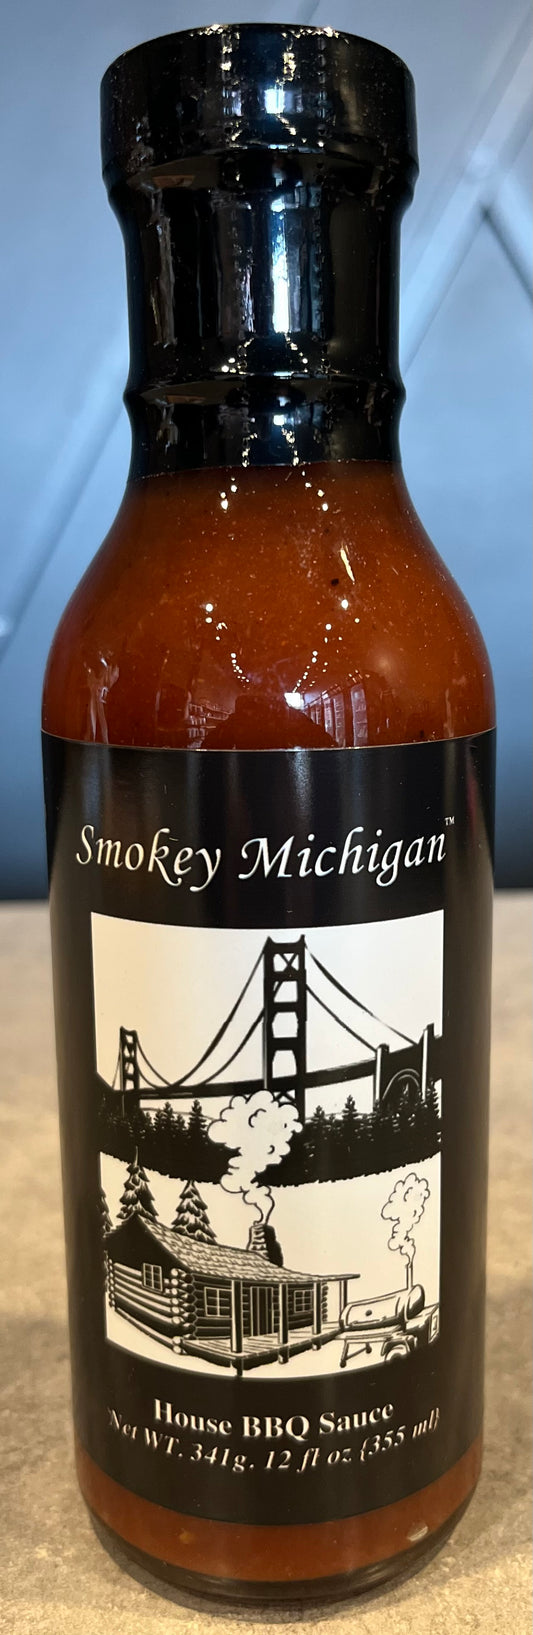 Smokey Michigan House BBQ Sauce